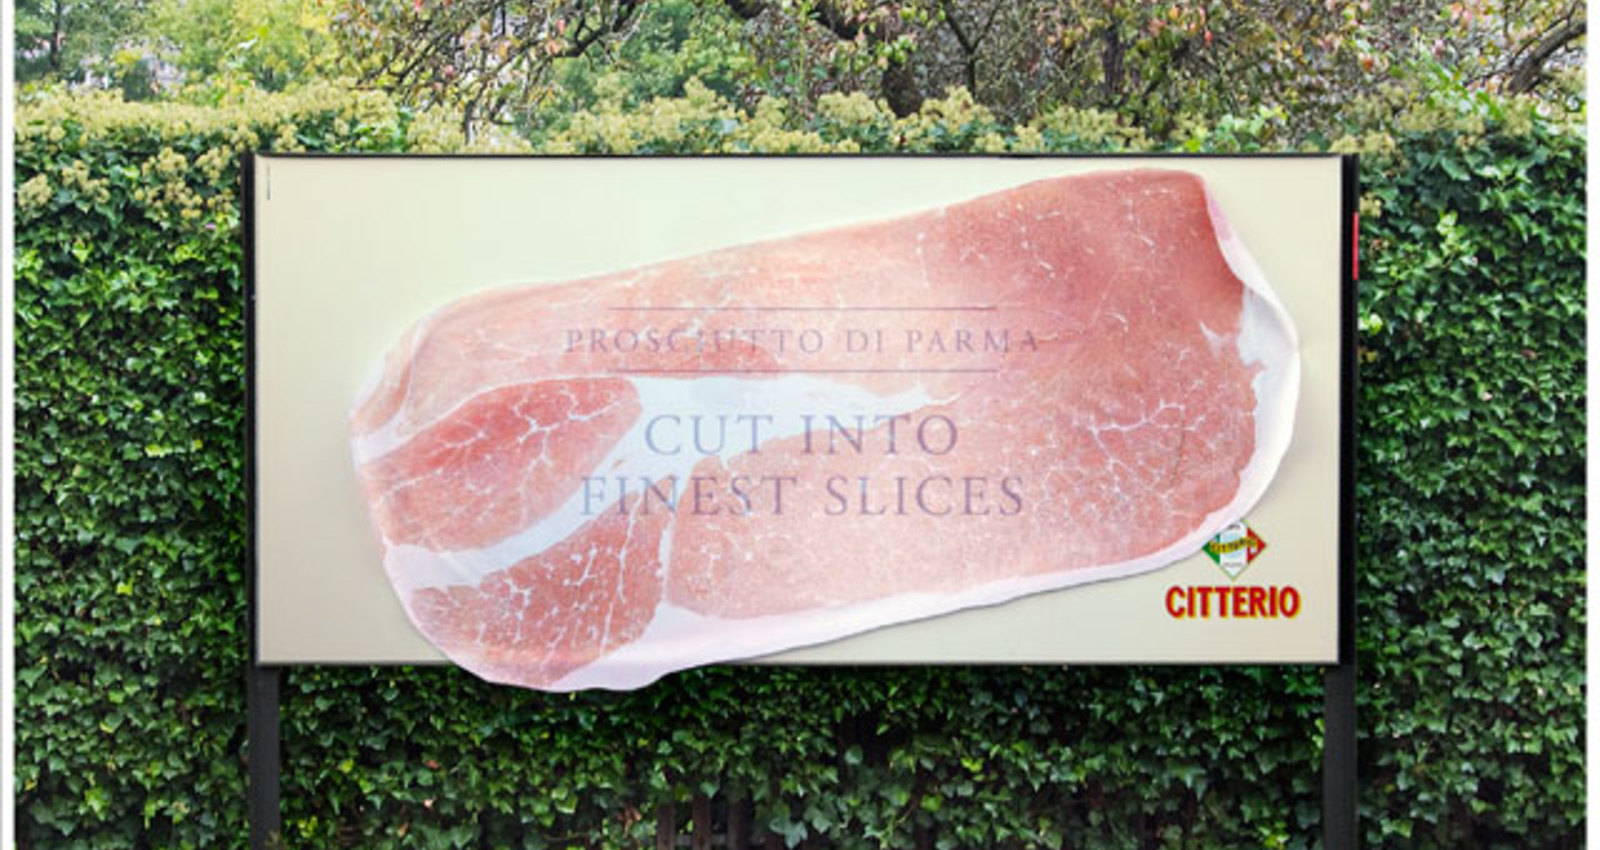 Citterio - Cut into finest slices